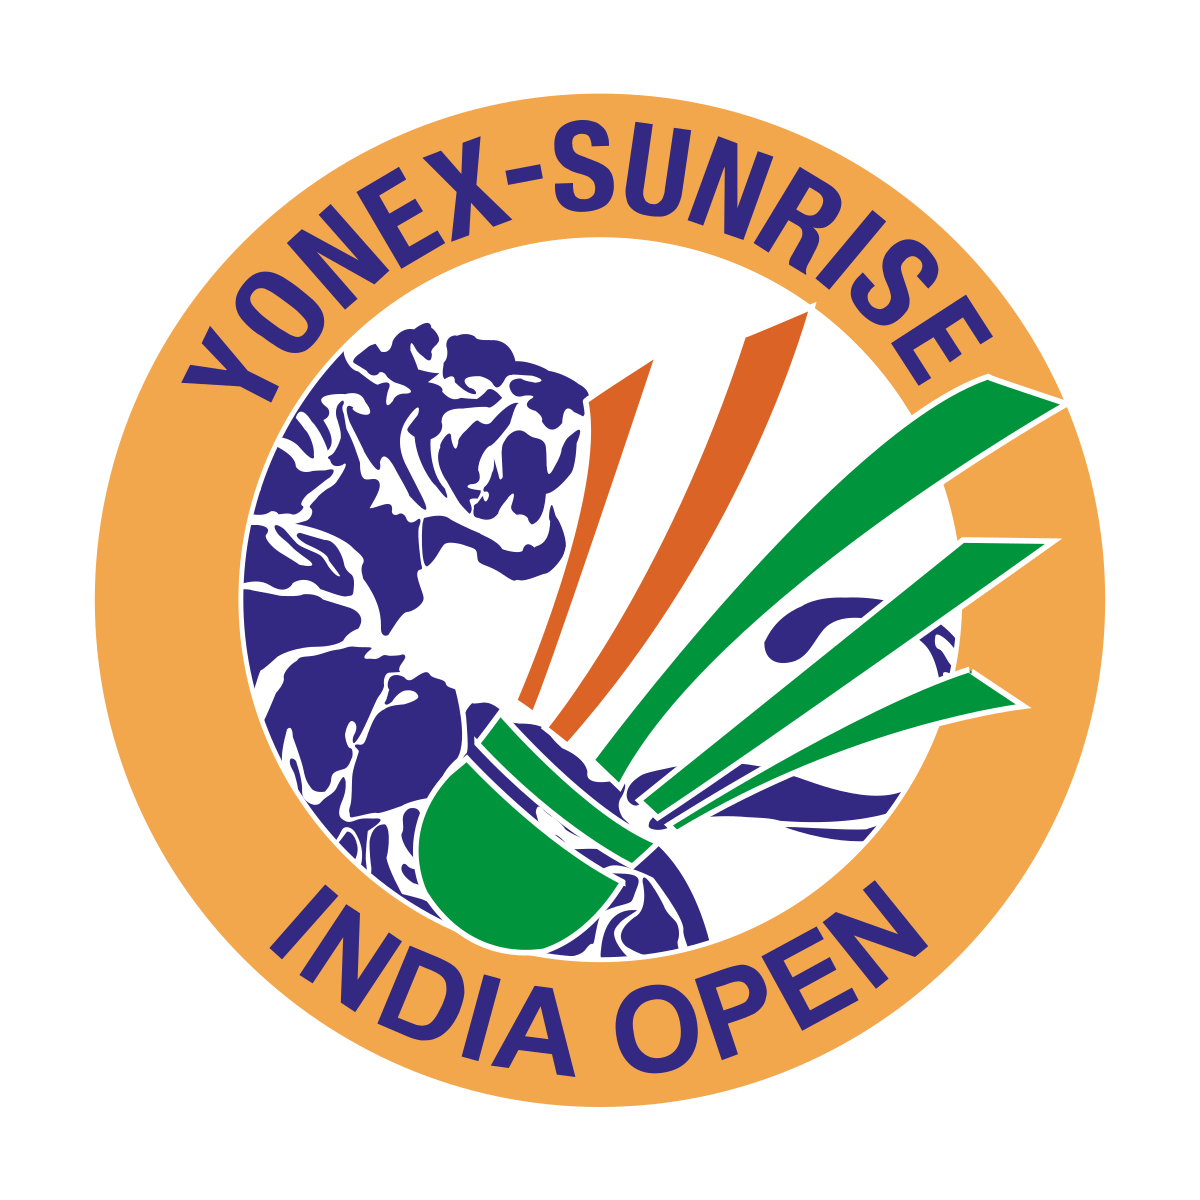 2022 india open (badminton)